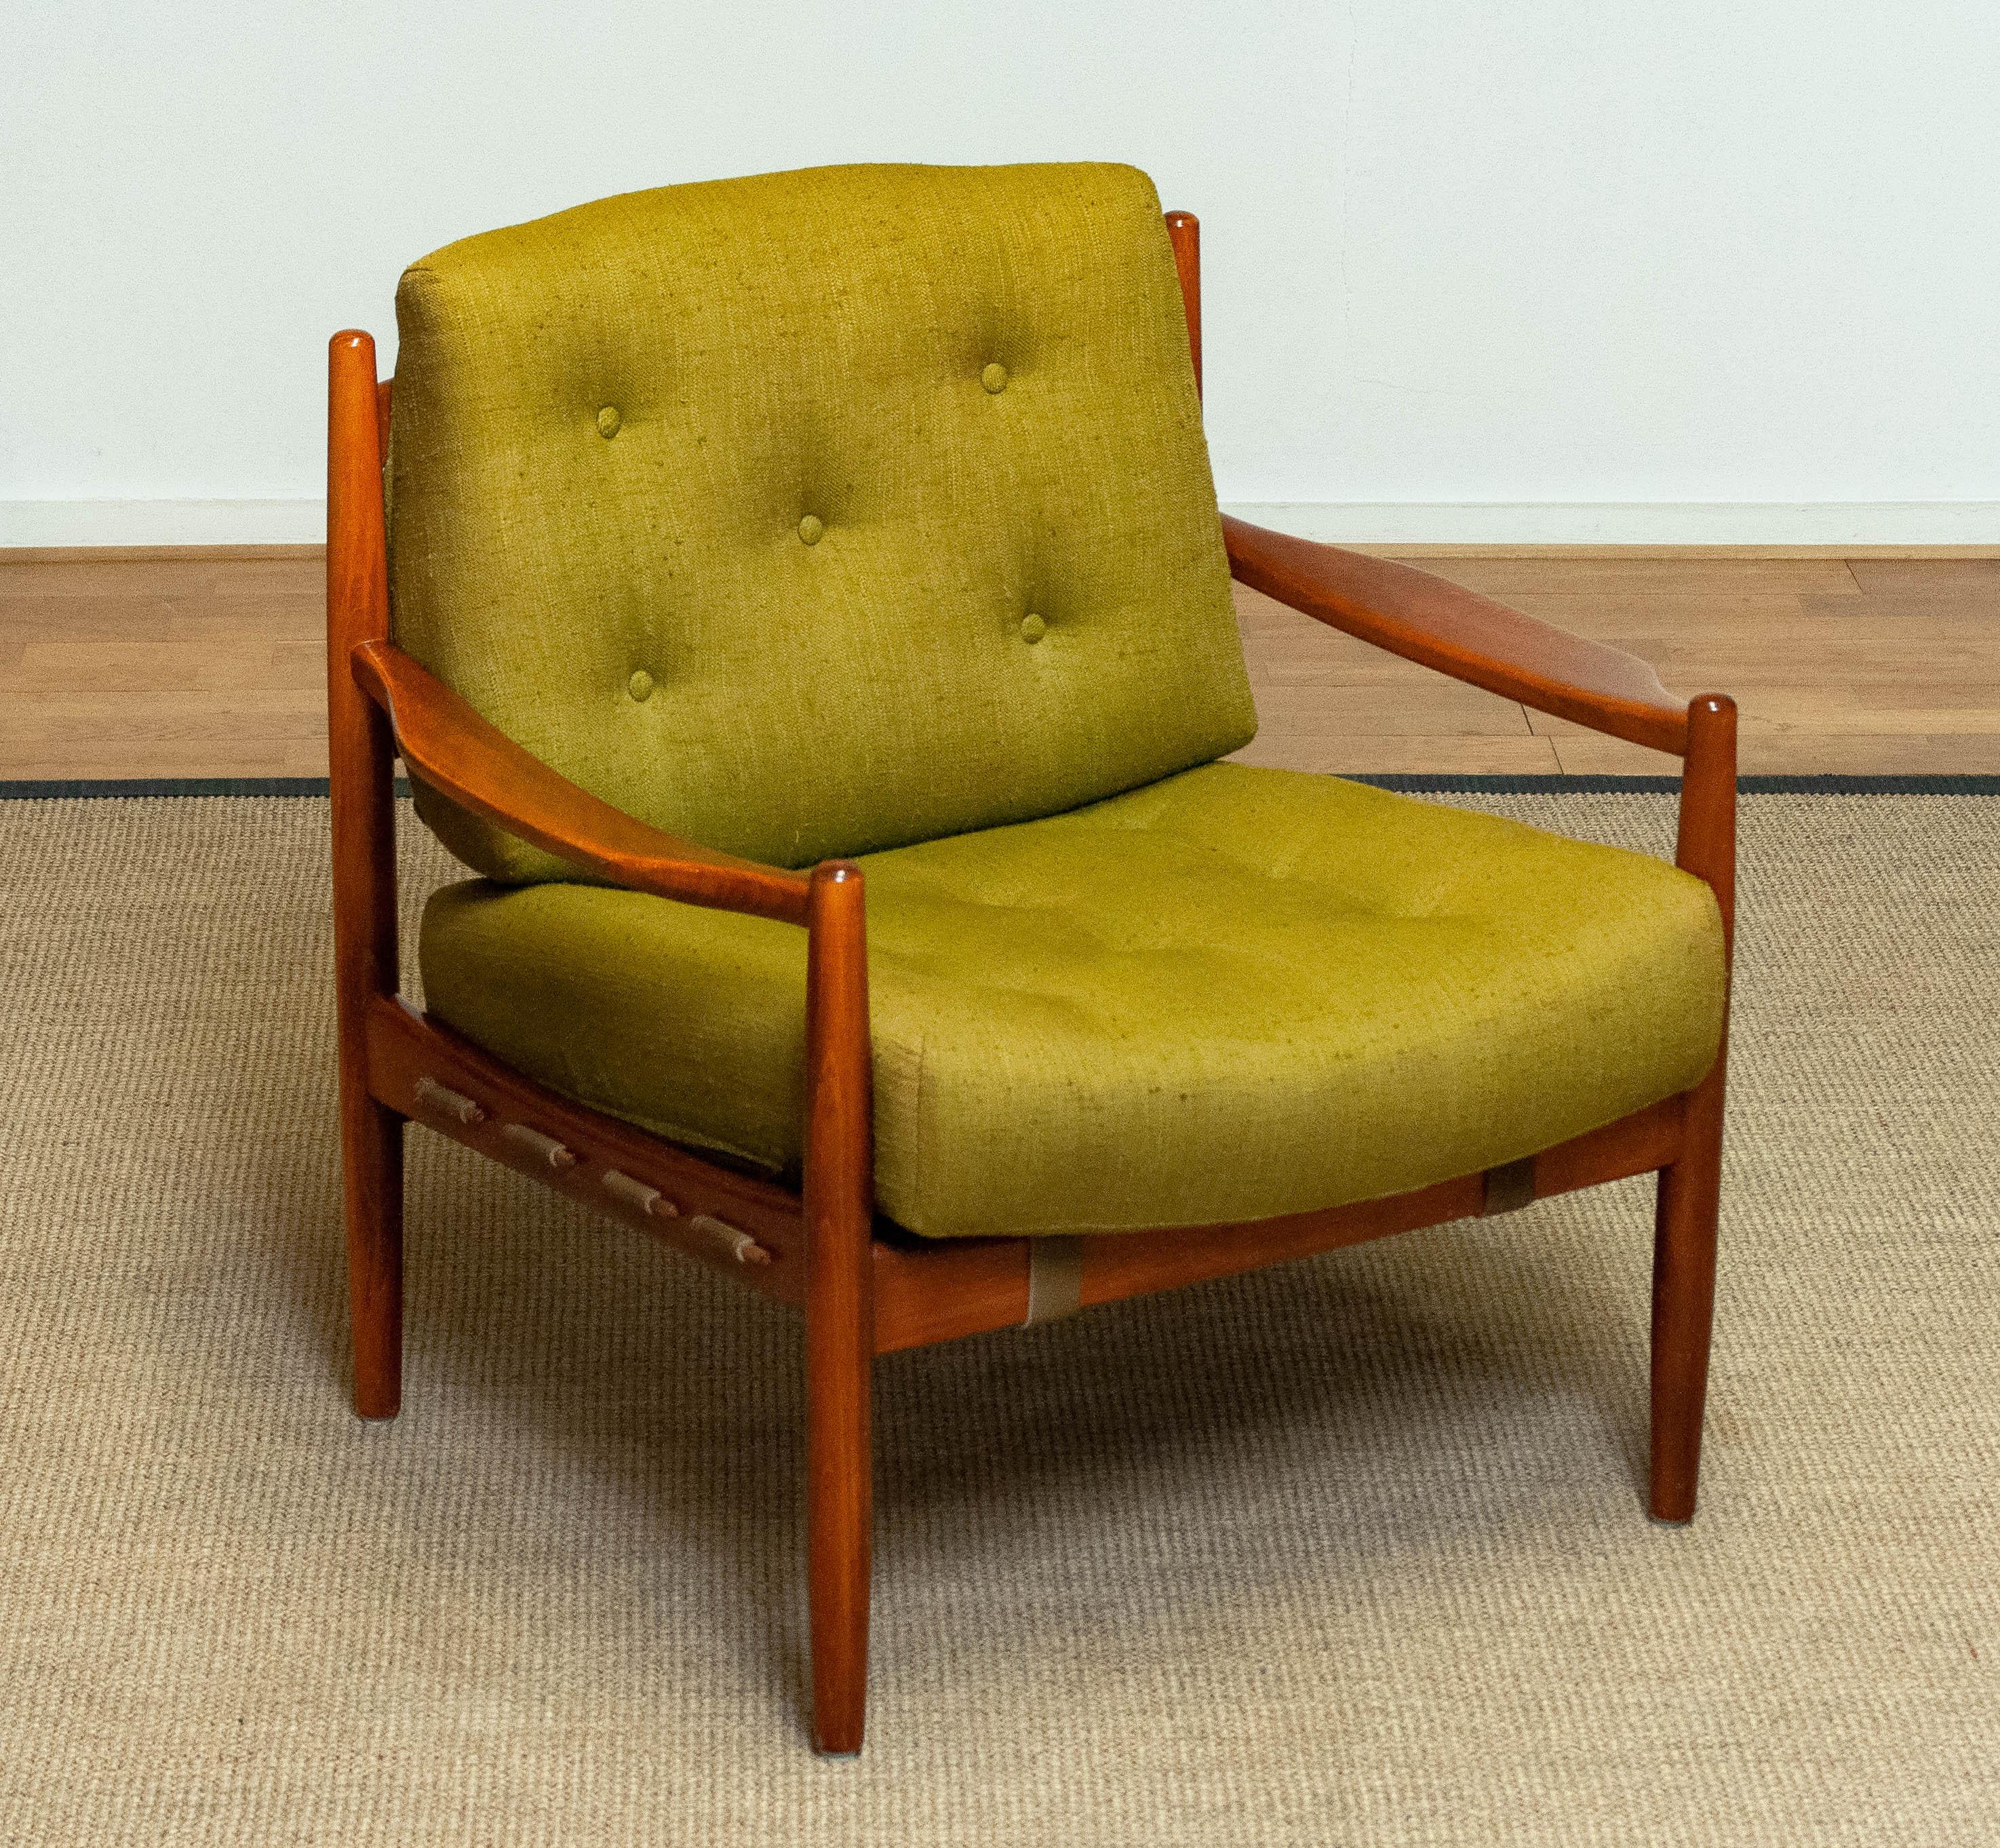 60s lounge chair